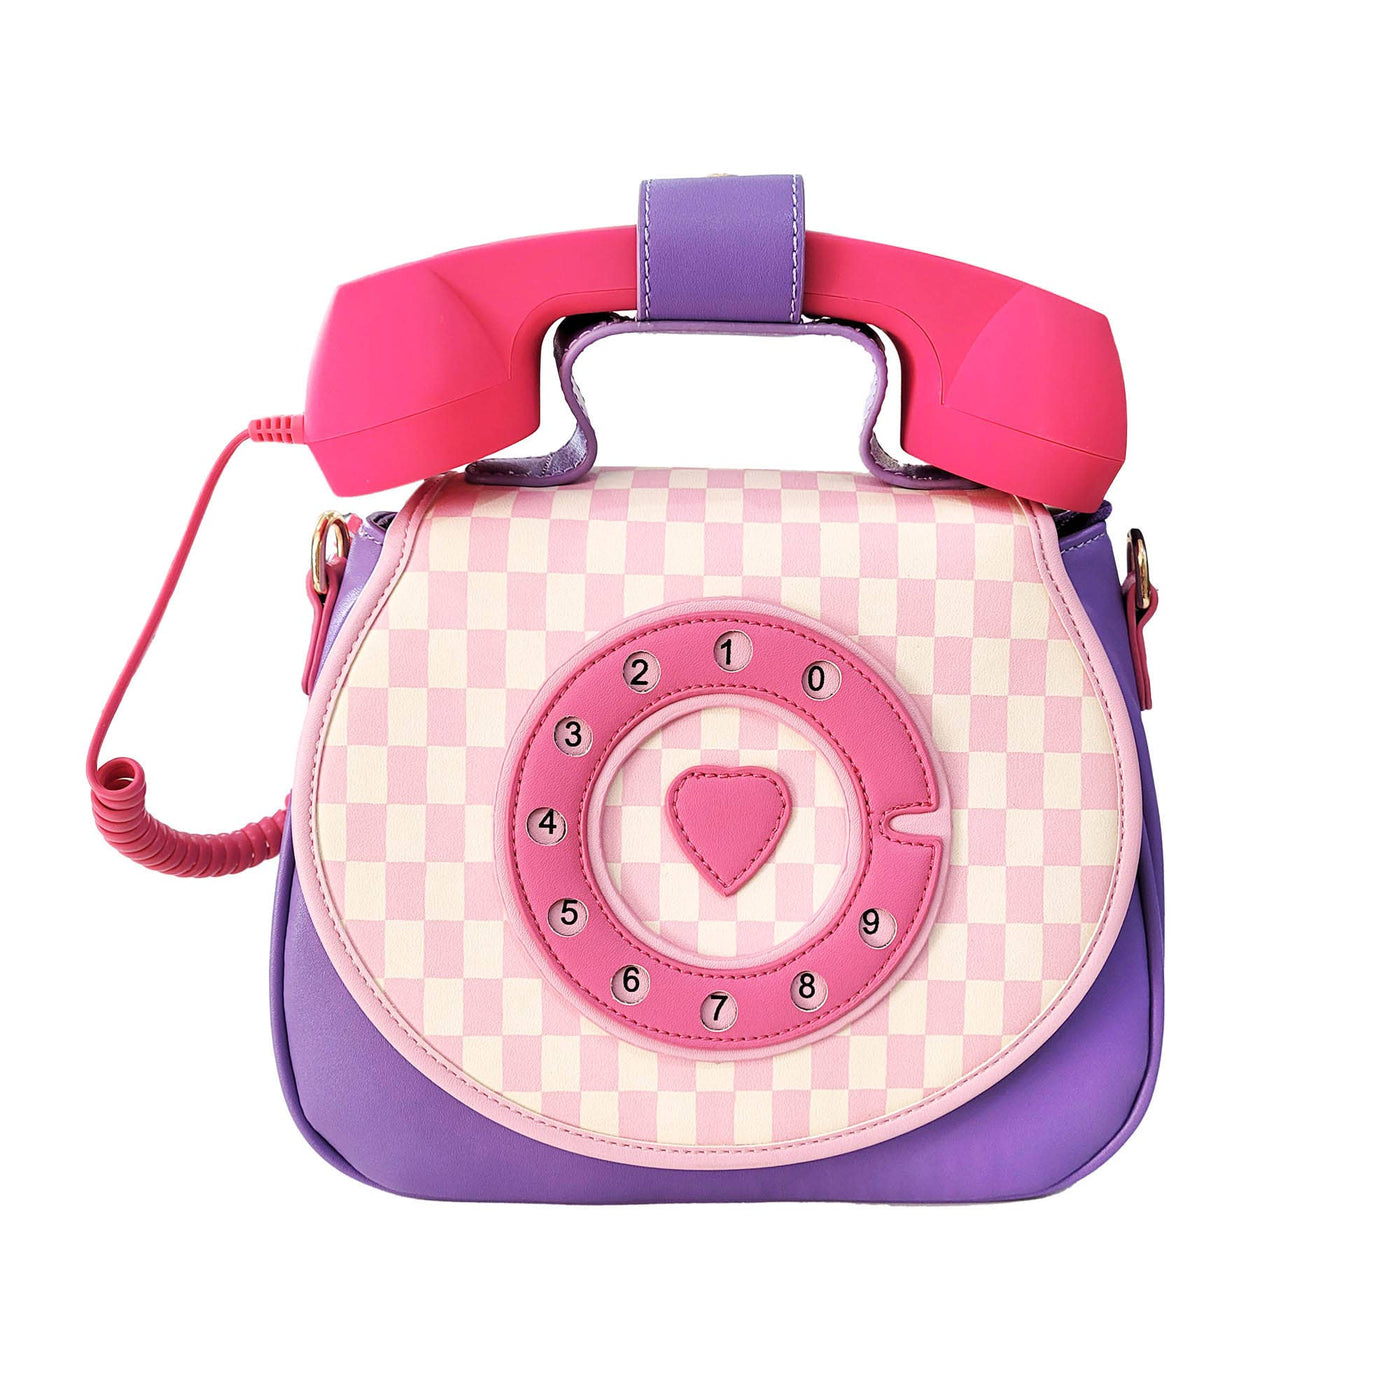 Bewaltz - Ring Ring Phone Convertible Handbag - Pastel Checkerboard